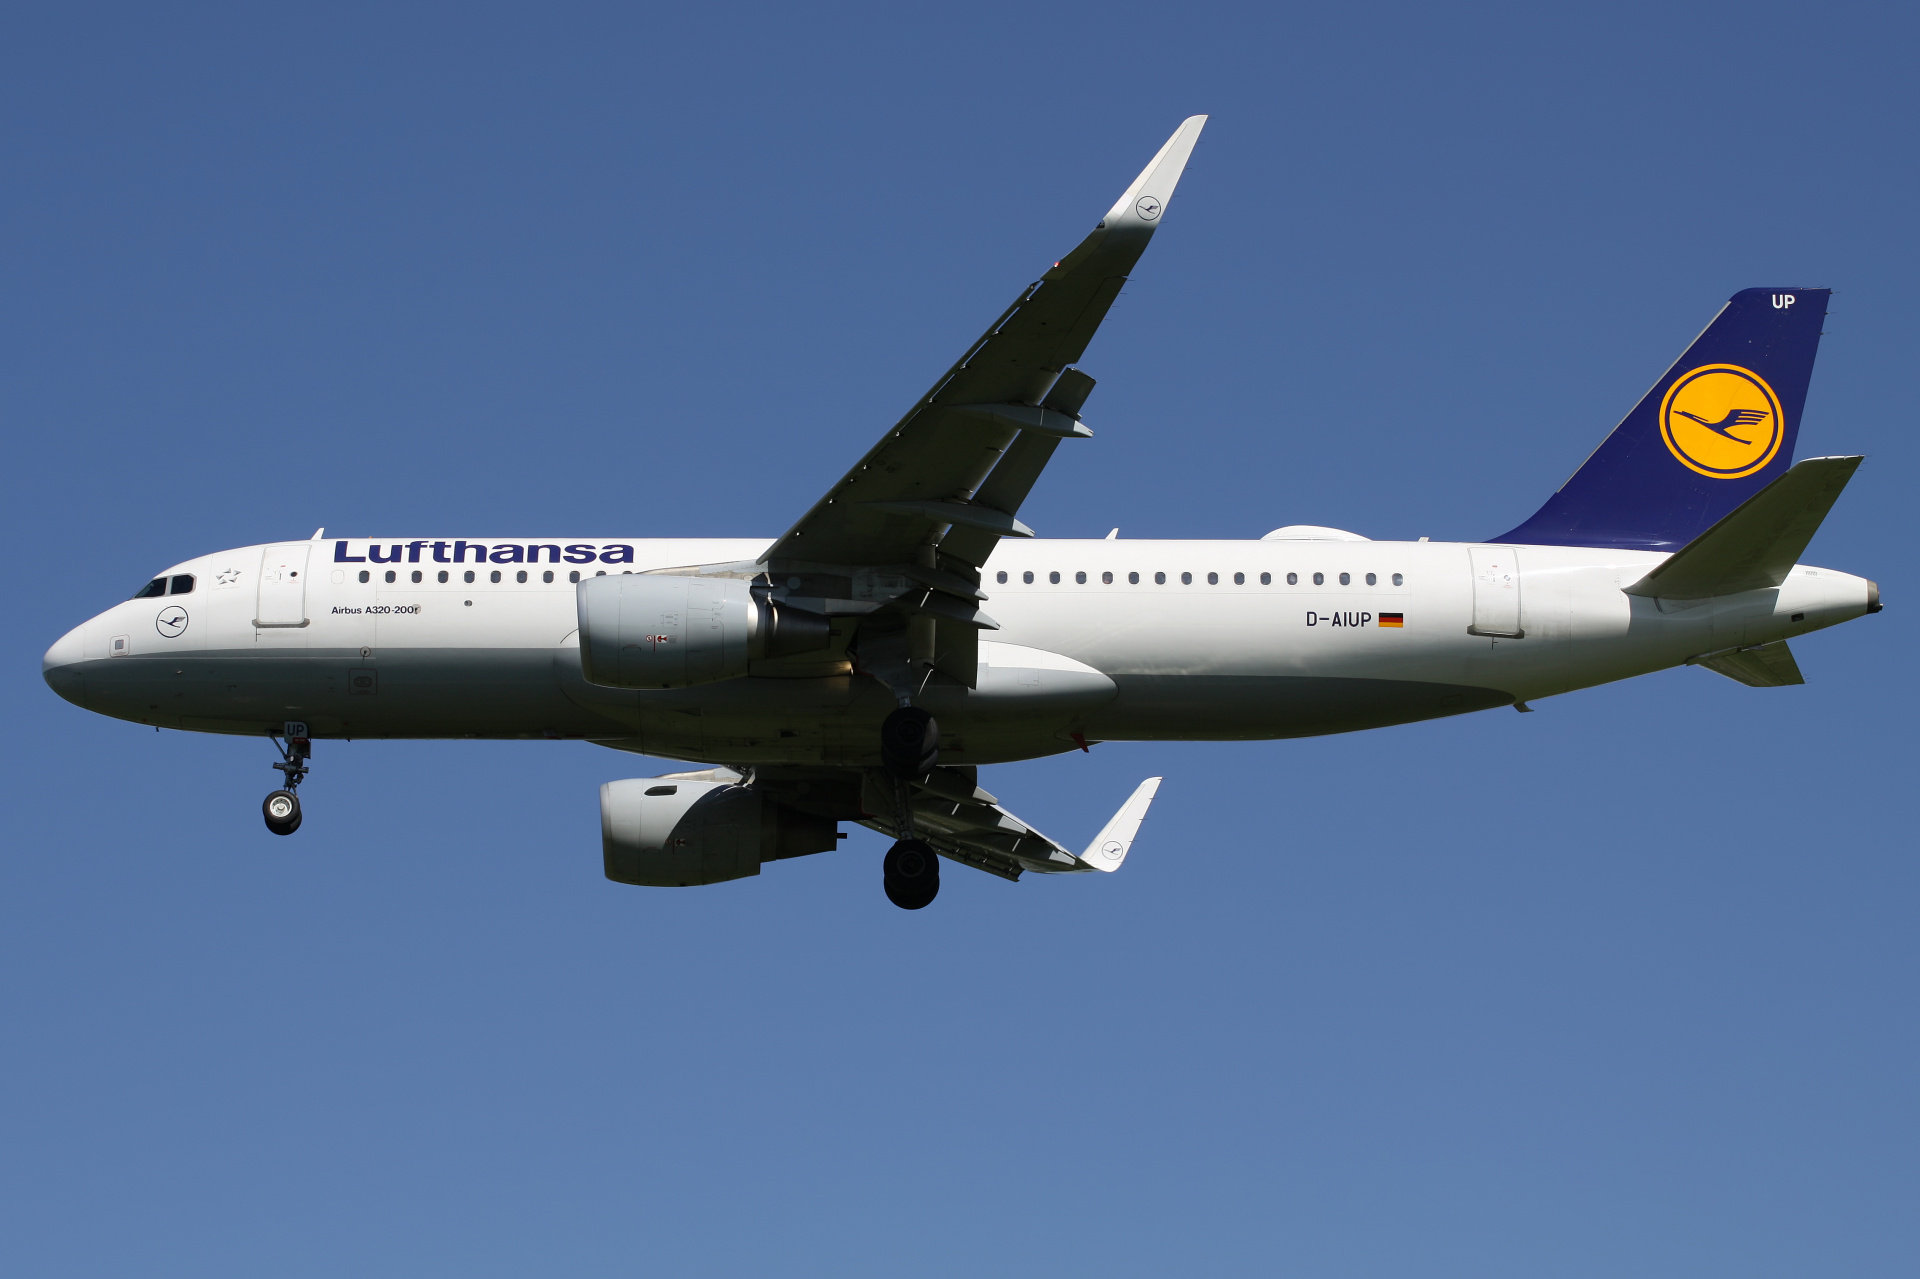 D-AIUP (Aircraft » EPWA Spotting » Airbus A320-200 » Lufthansa)